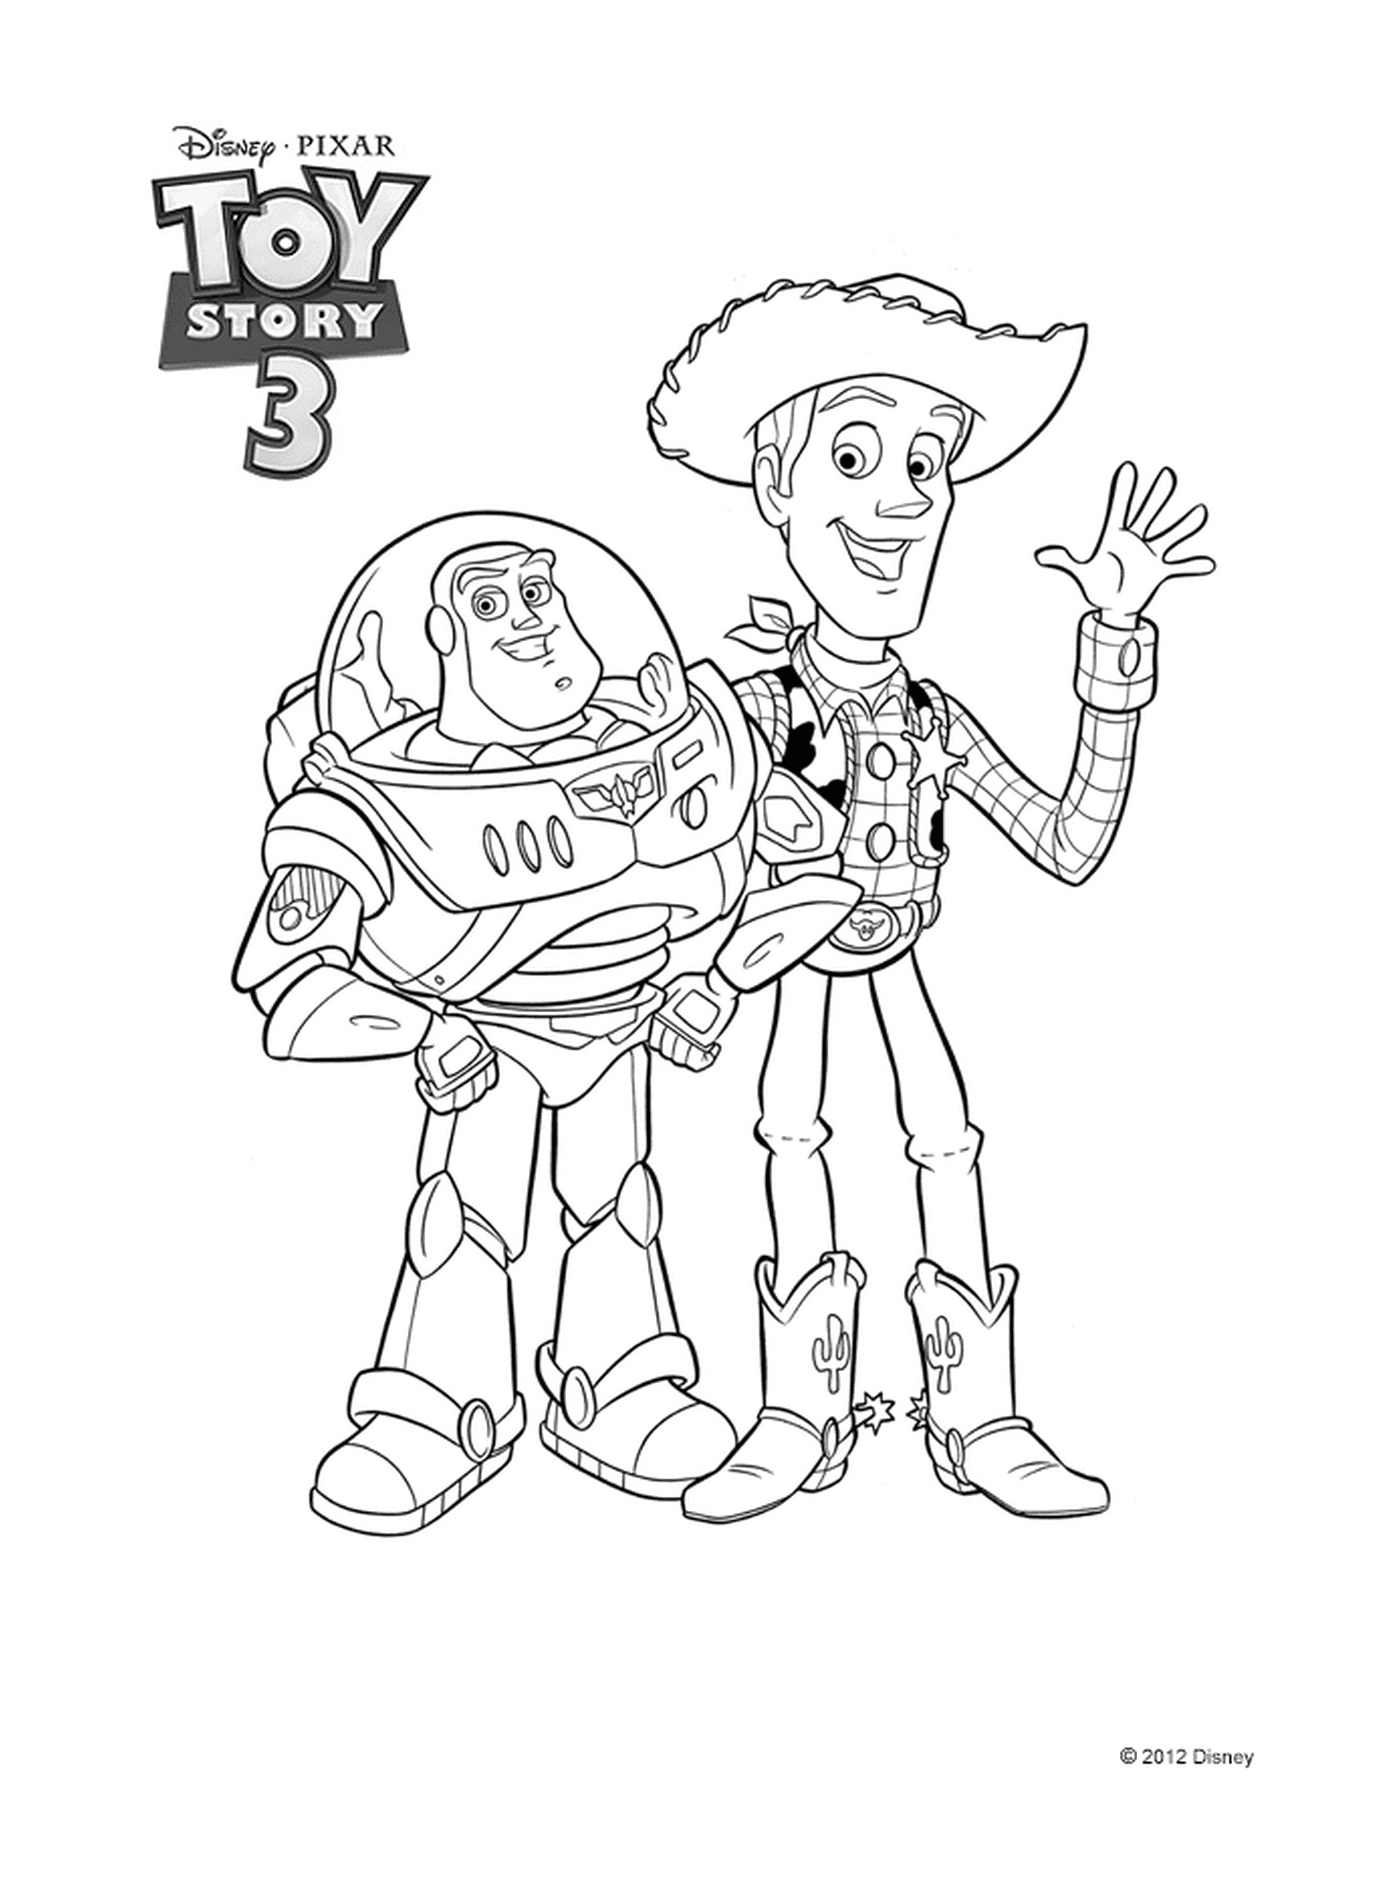   Toy Story 3, aventure avec Buzz et Woody 